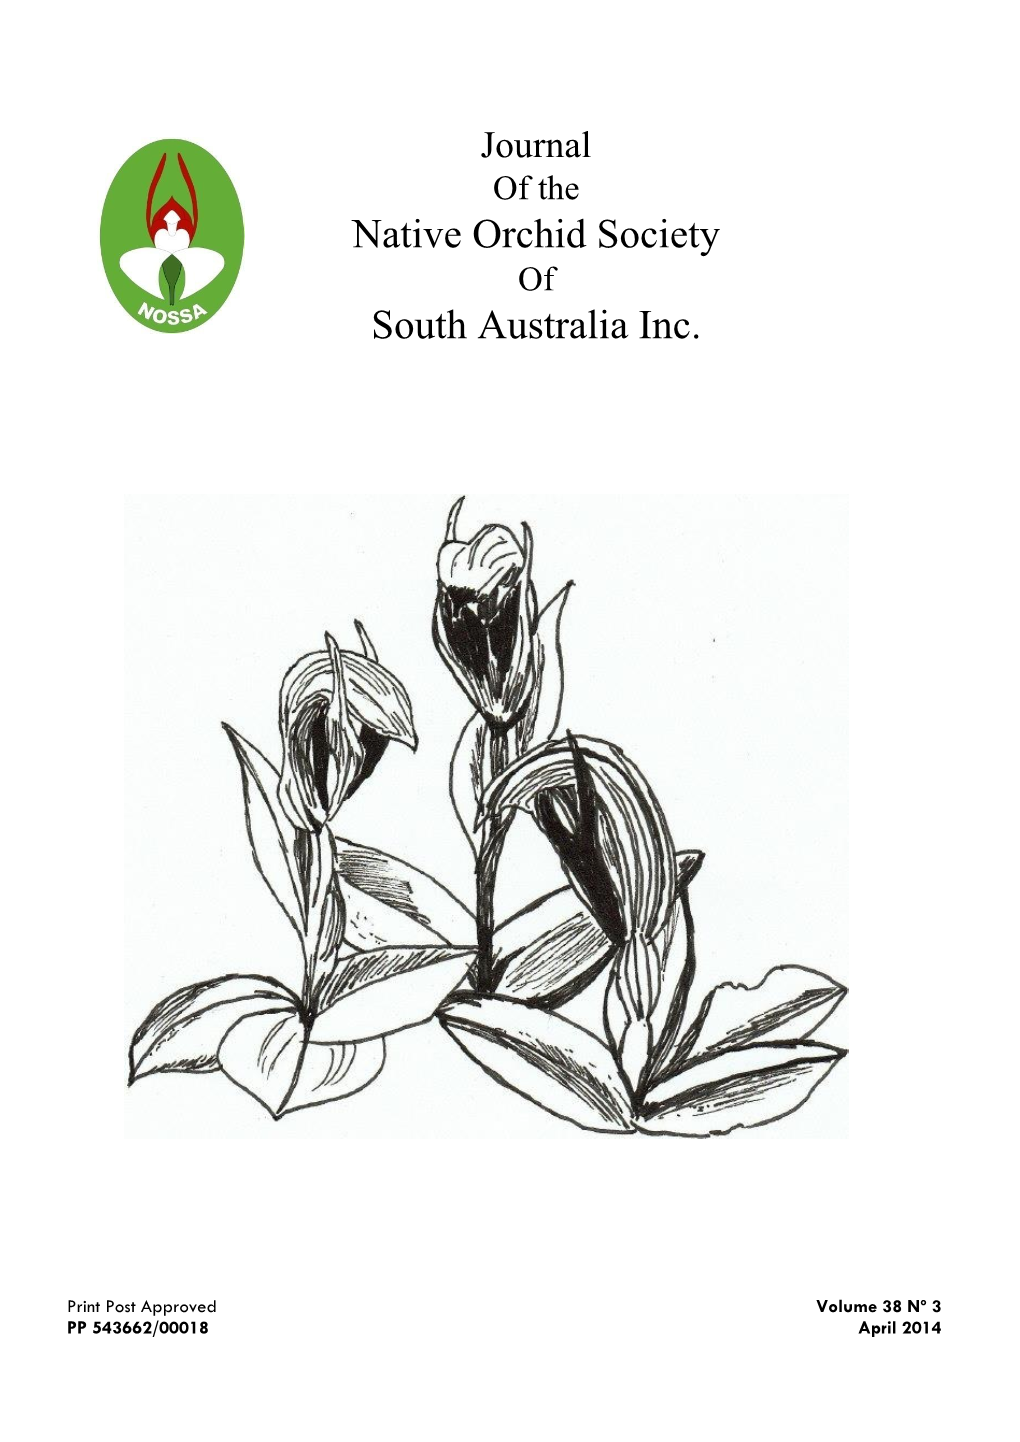 Native Orchid Society South Australia Inc